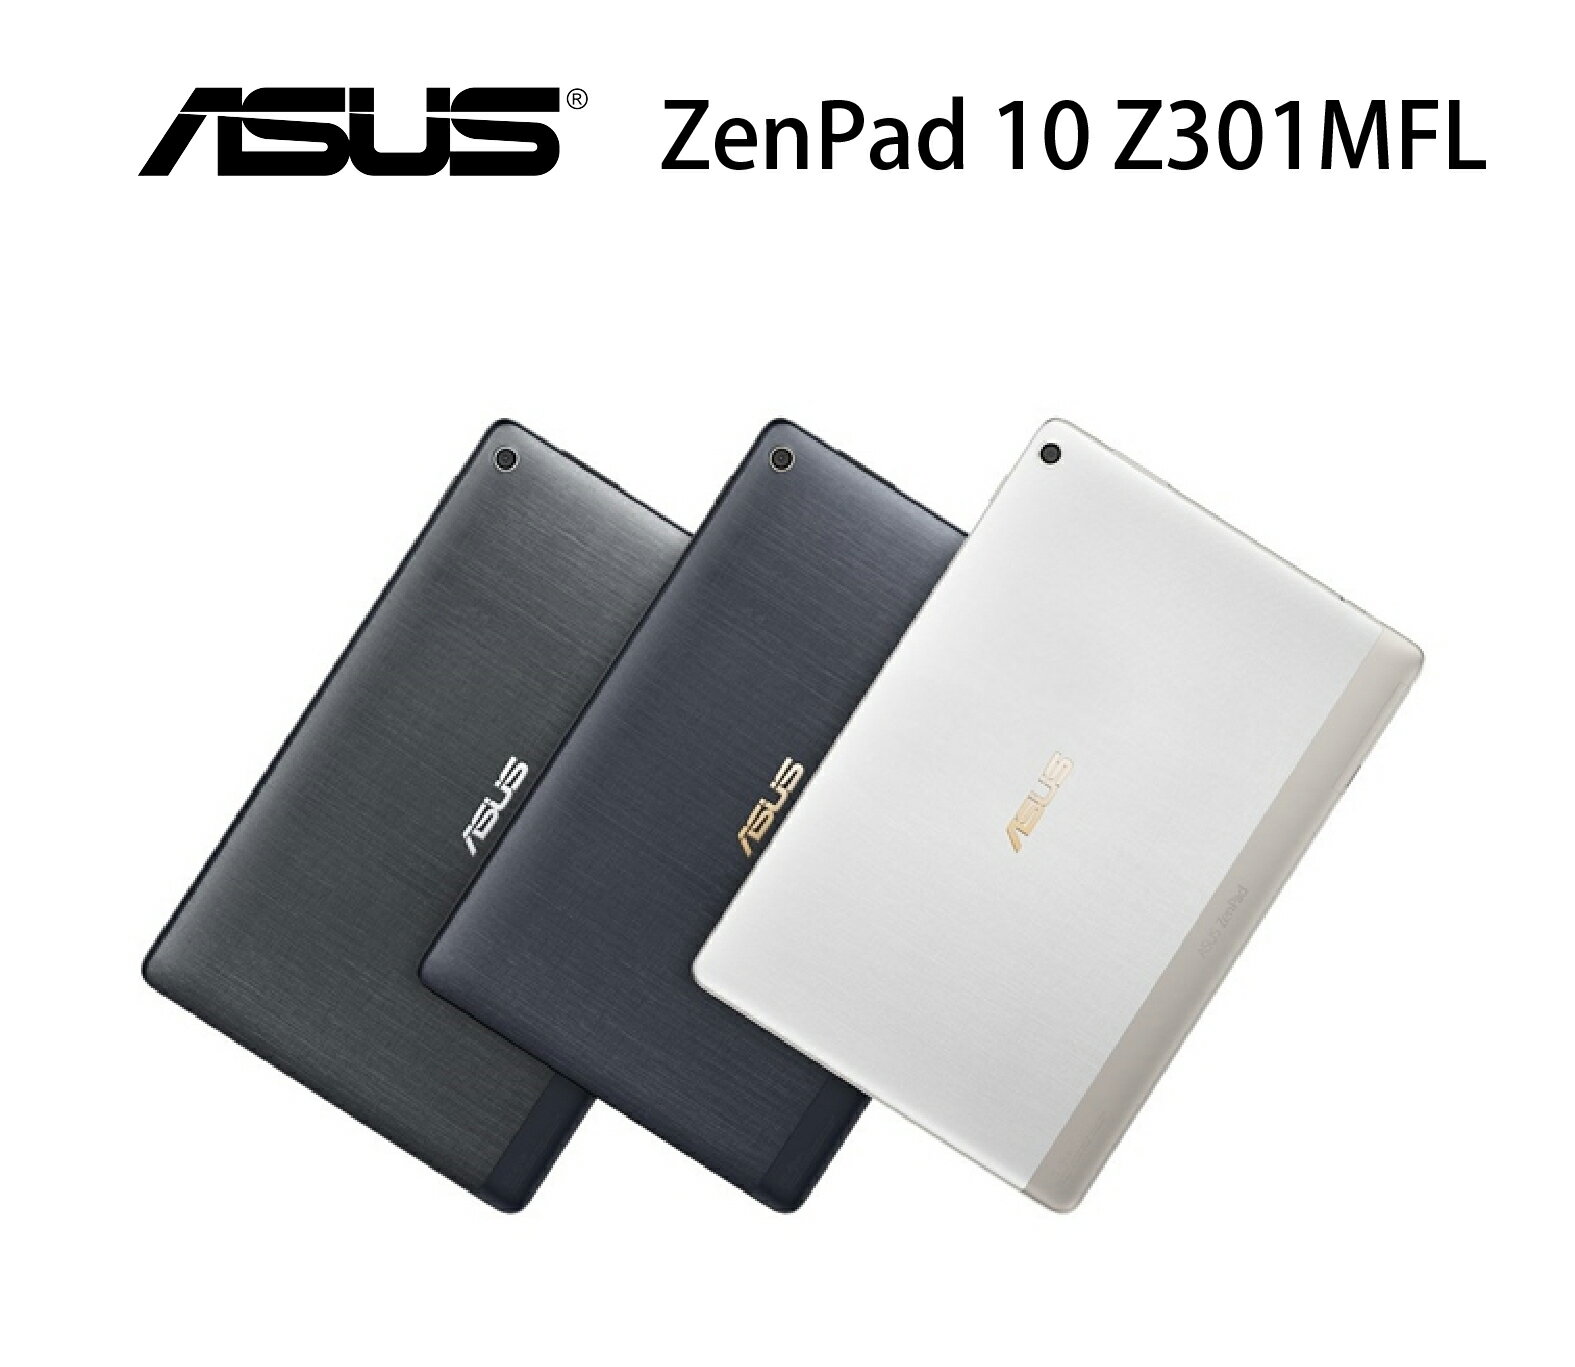  ASUS 華碩 ZenPad 10 Z301MFL 3G/32G 追劇平板 -灰/藍/白 《贈32G記憶卡》 評價